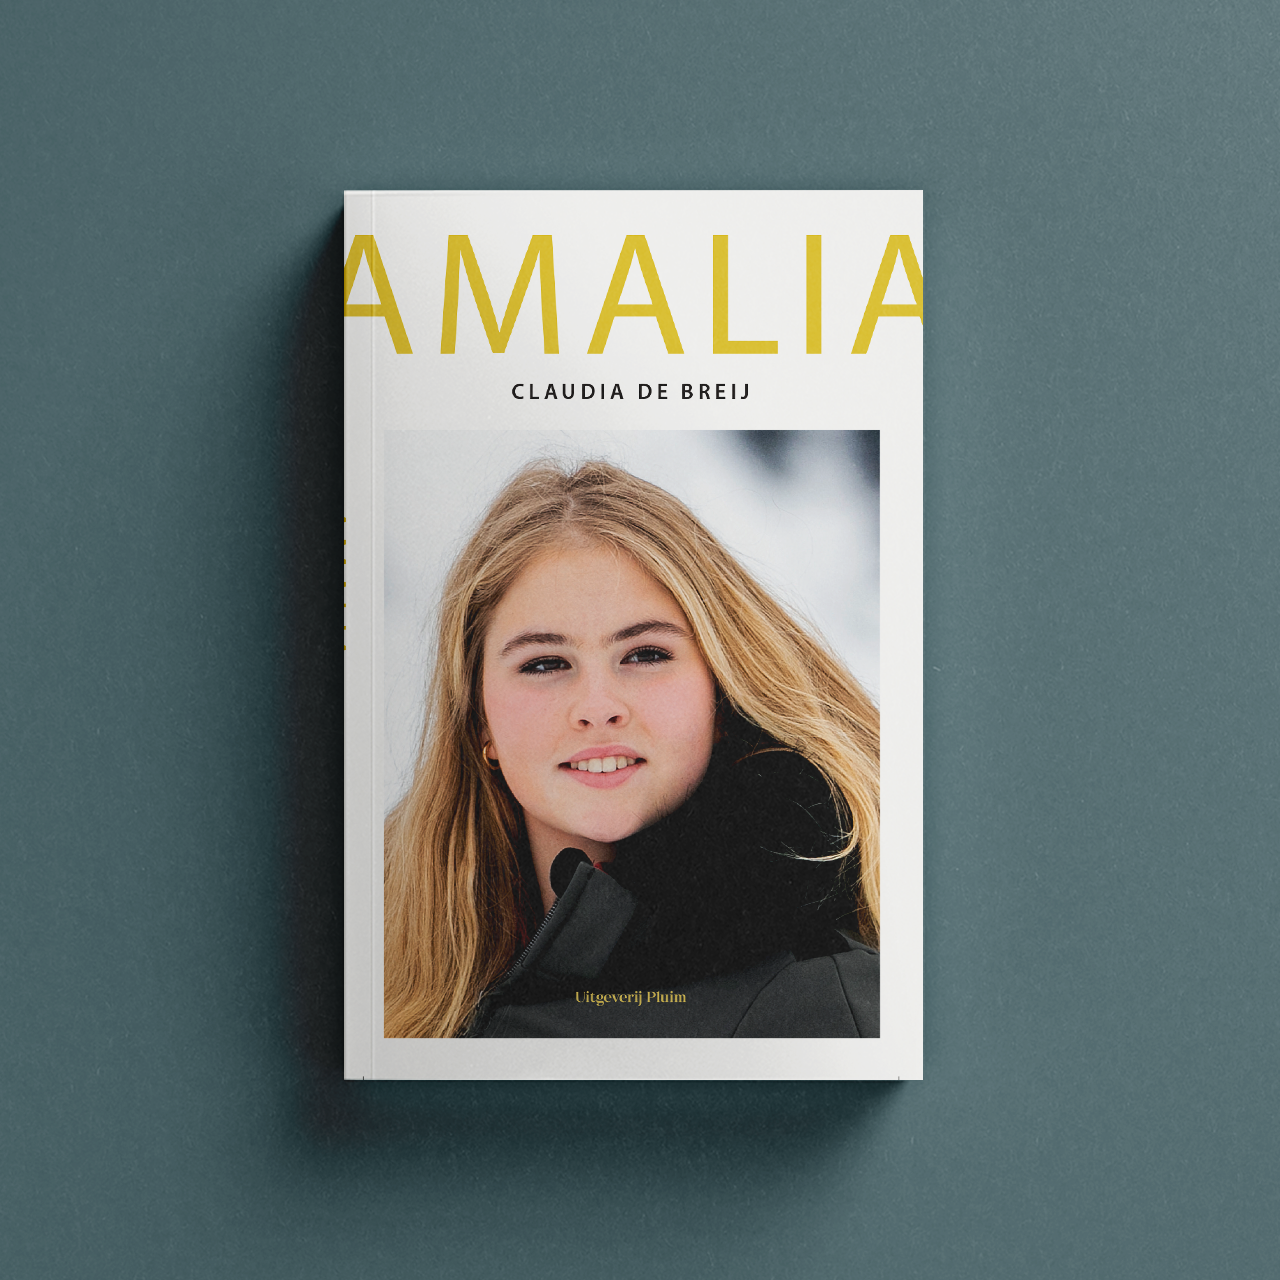 Digital-books_Amalia